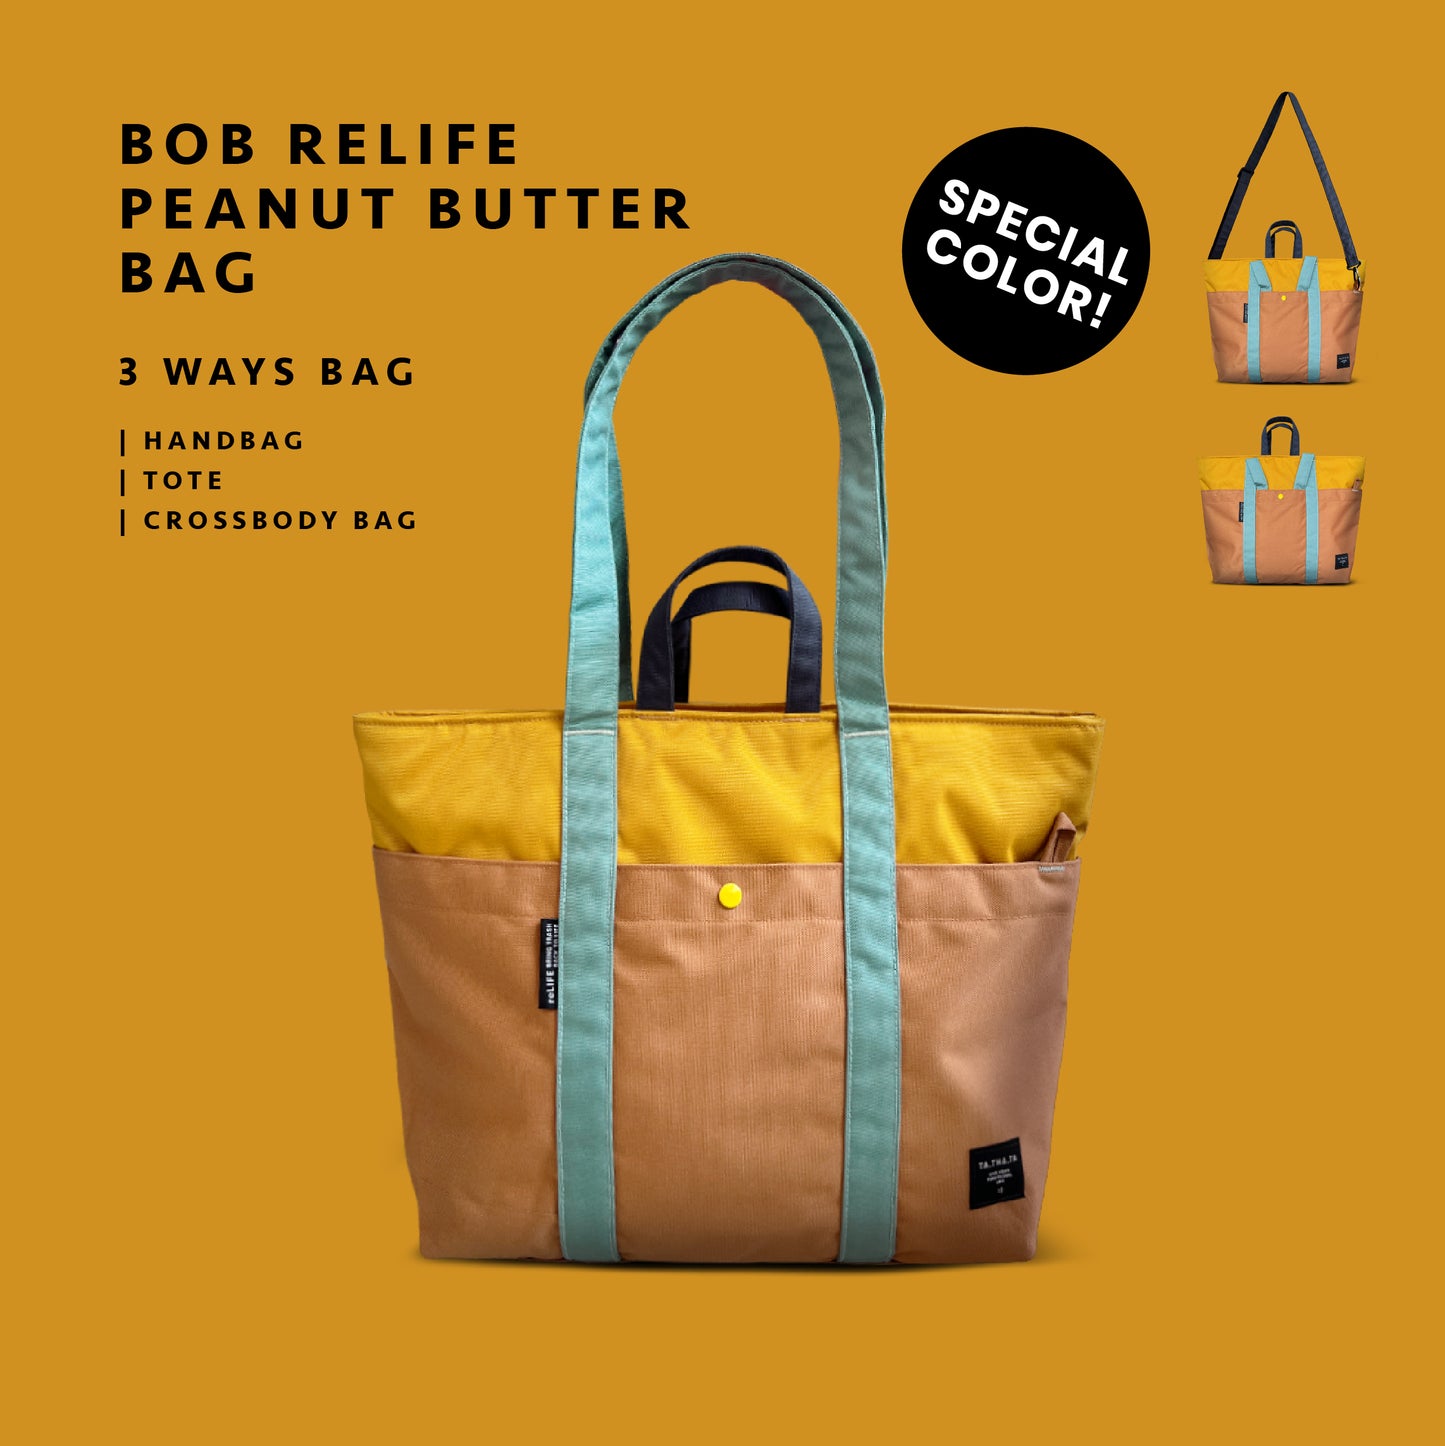 Bob relife peanut butter bag